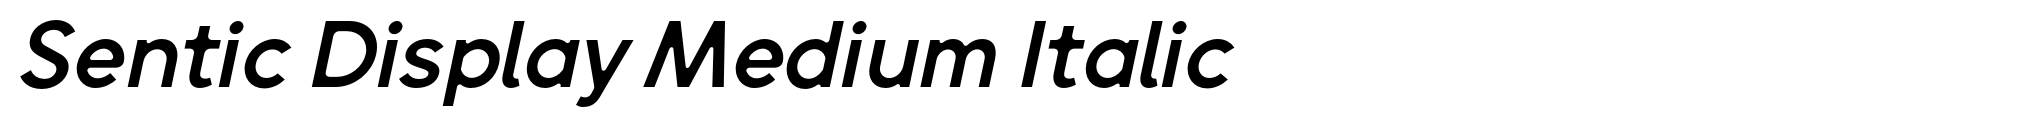 Sentic Display Medium Italic image